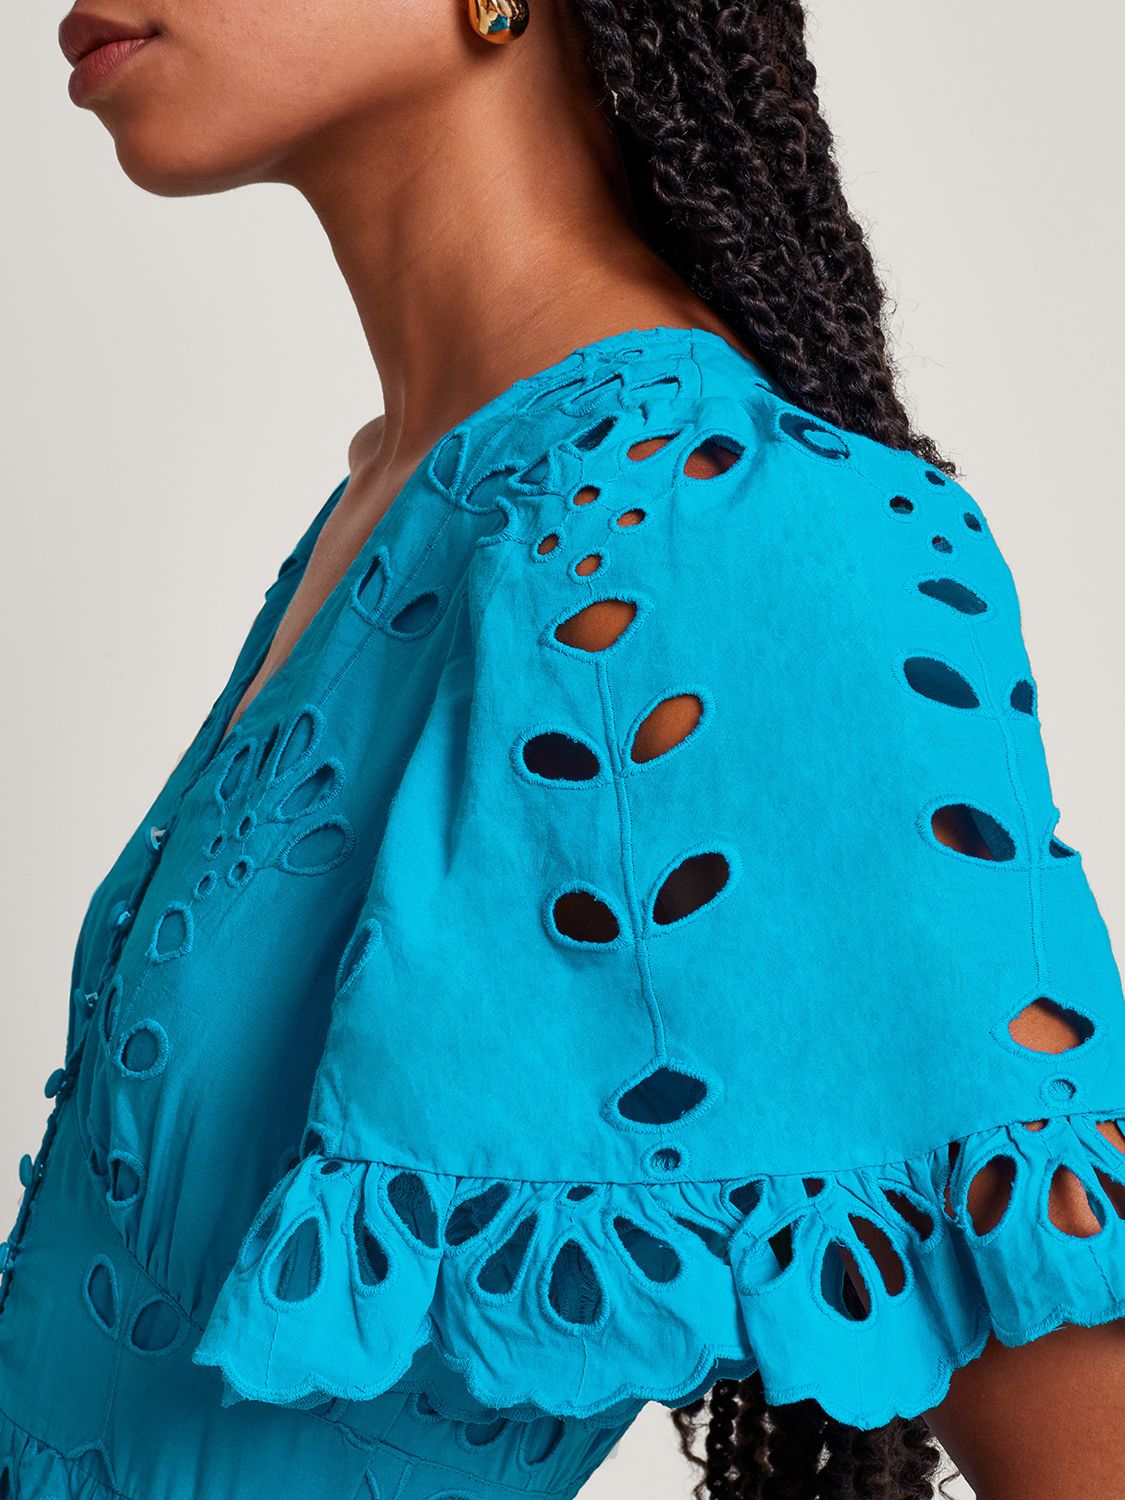 Monsoon Beatrice Broderie Midi Dress, Turquoise, S